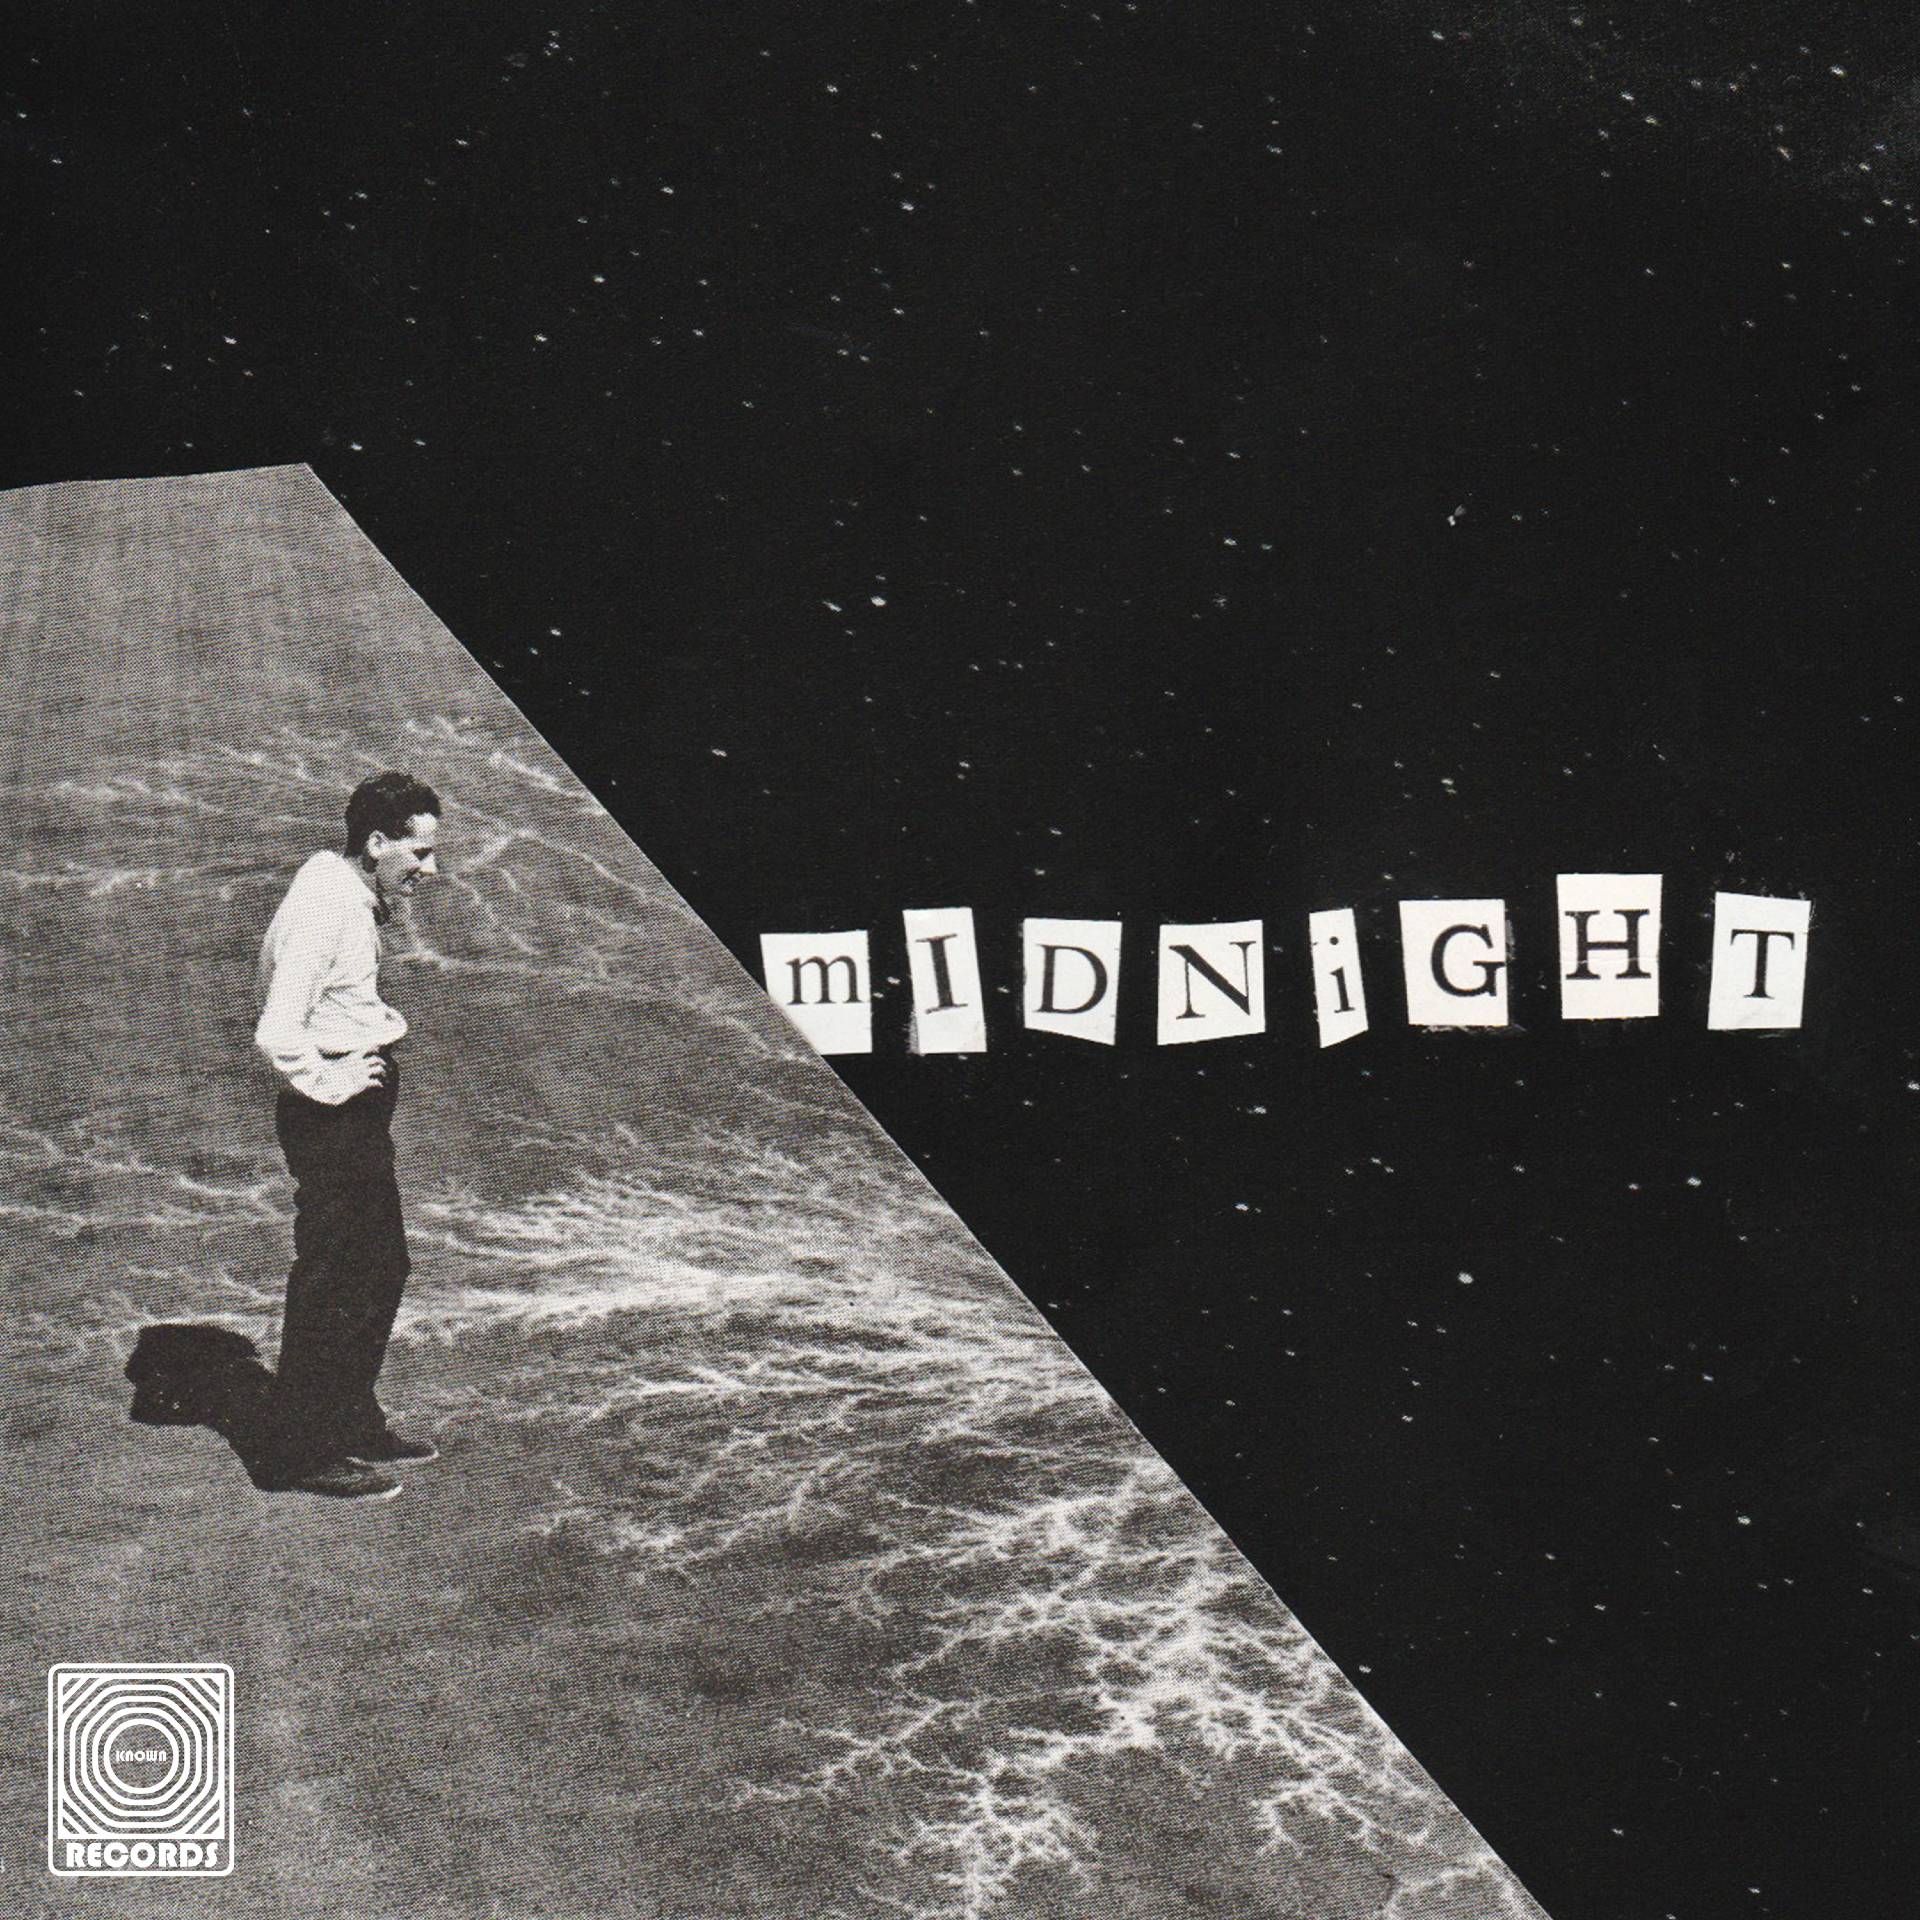 Kojak “Midnight” single artwork